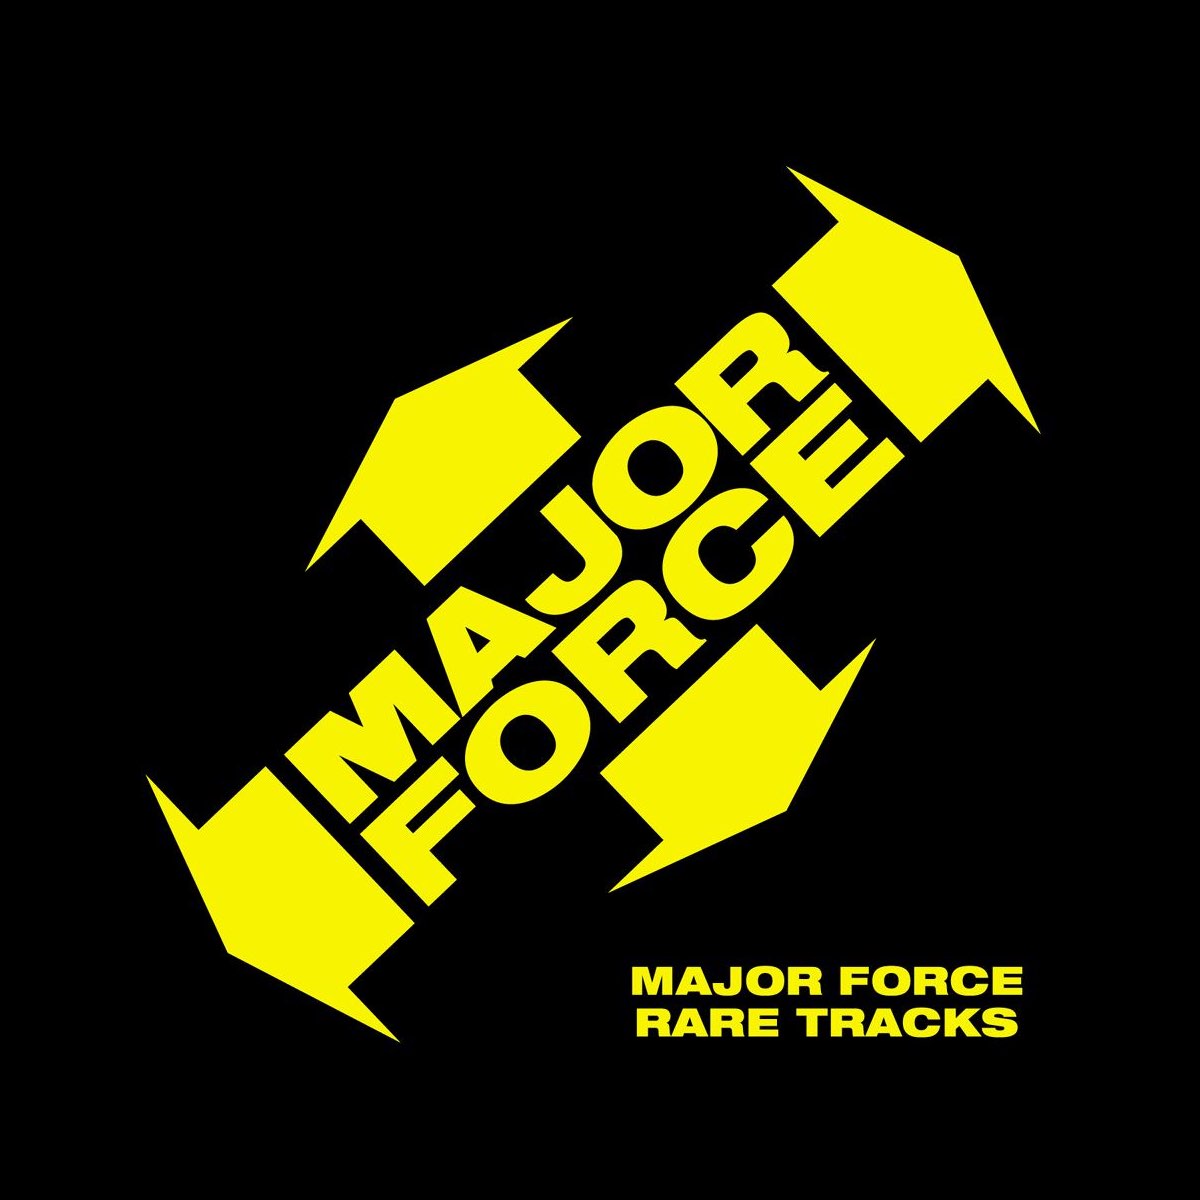 Песня форс мажор back. Force Major. Rare tracks. Middlename Force Major. Production Forces.